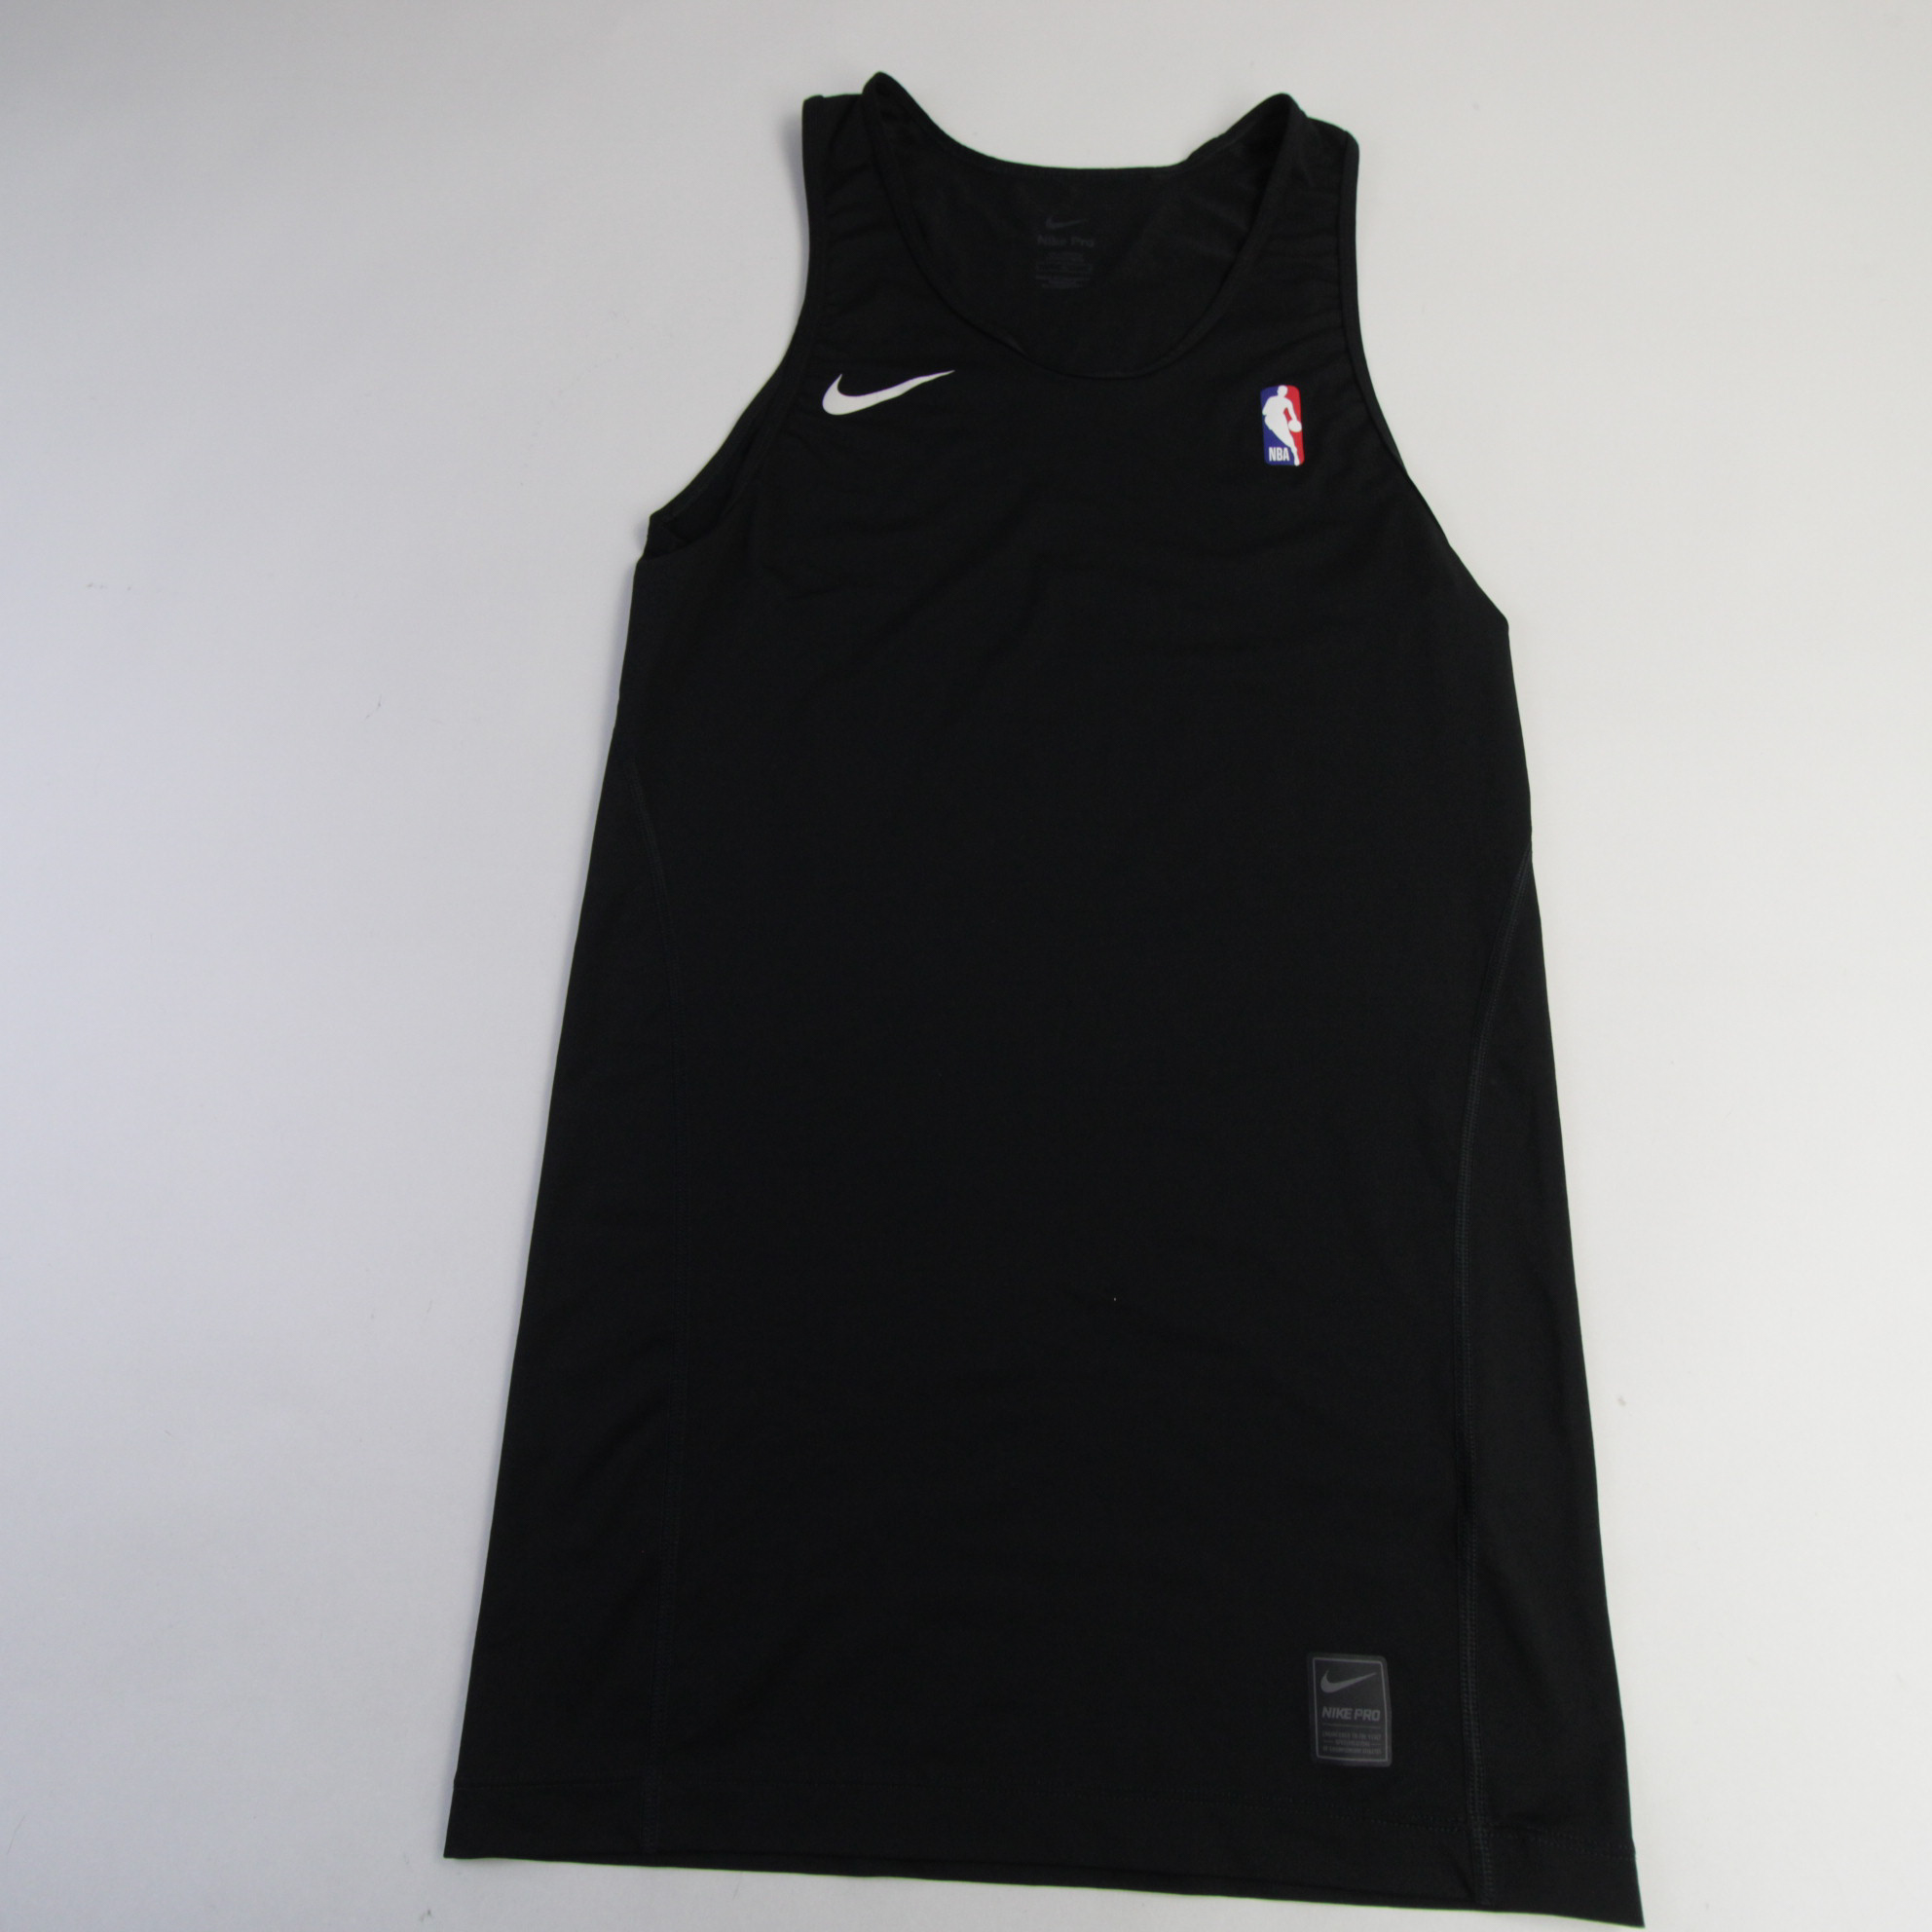 Nike NBA Authentics Compression Top Men's Black Used LT 436